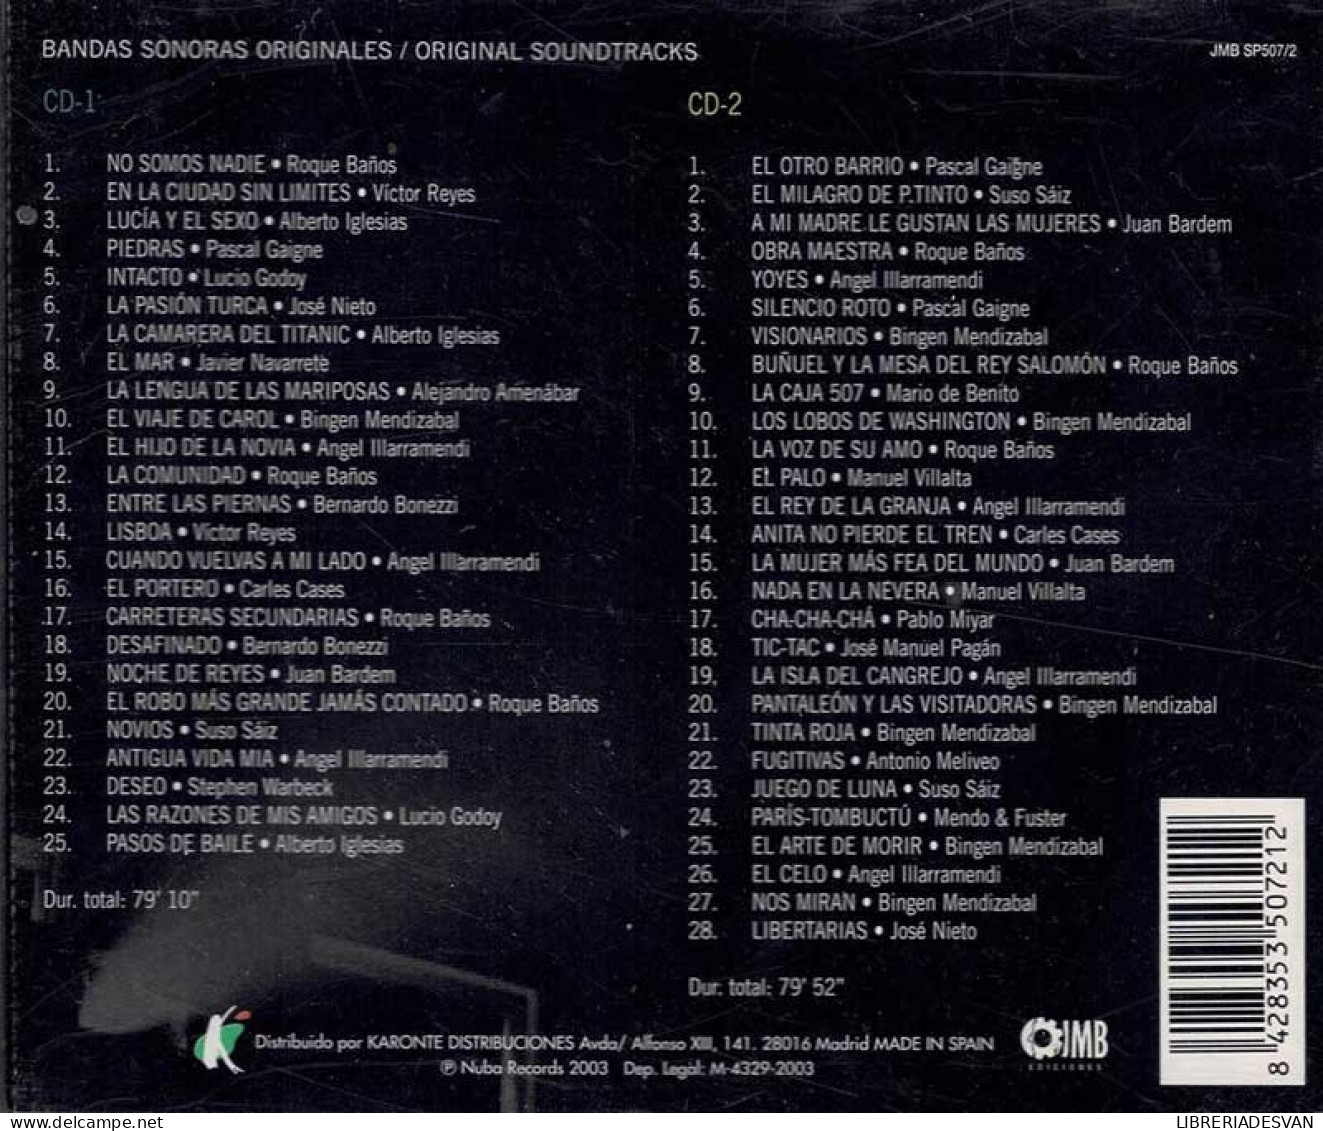 Una Música De Cine Español. Volumen 1. 2 X CD - Filmmusik